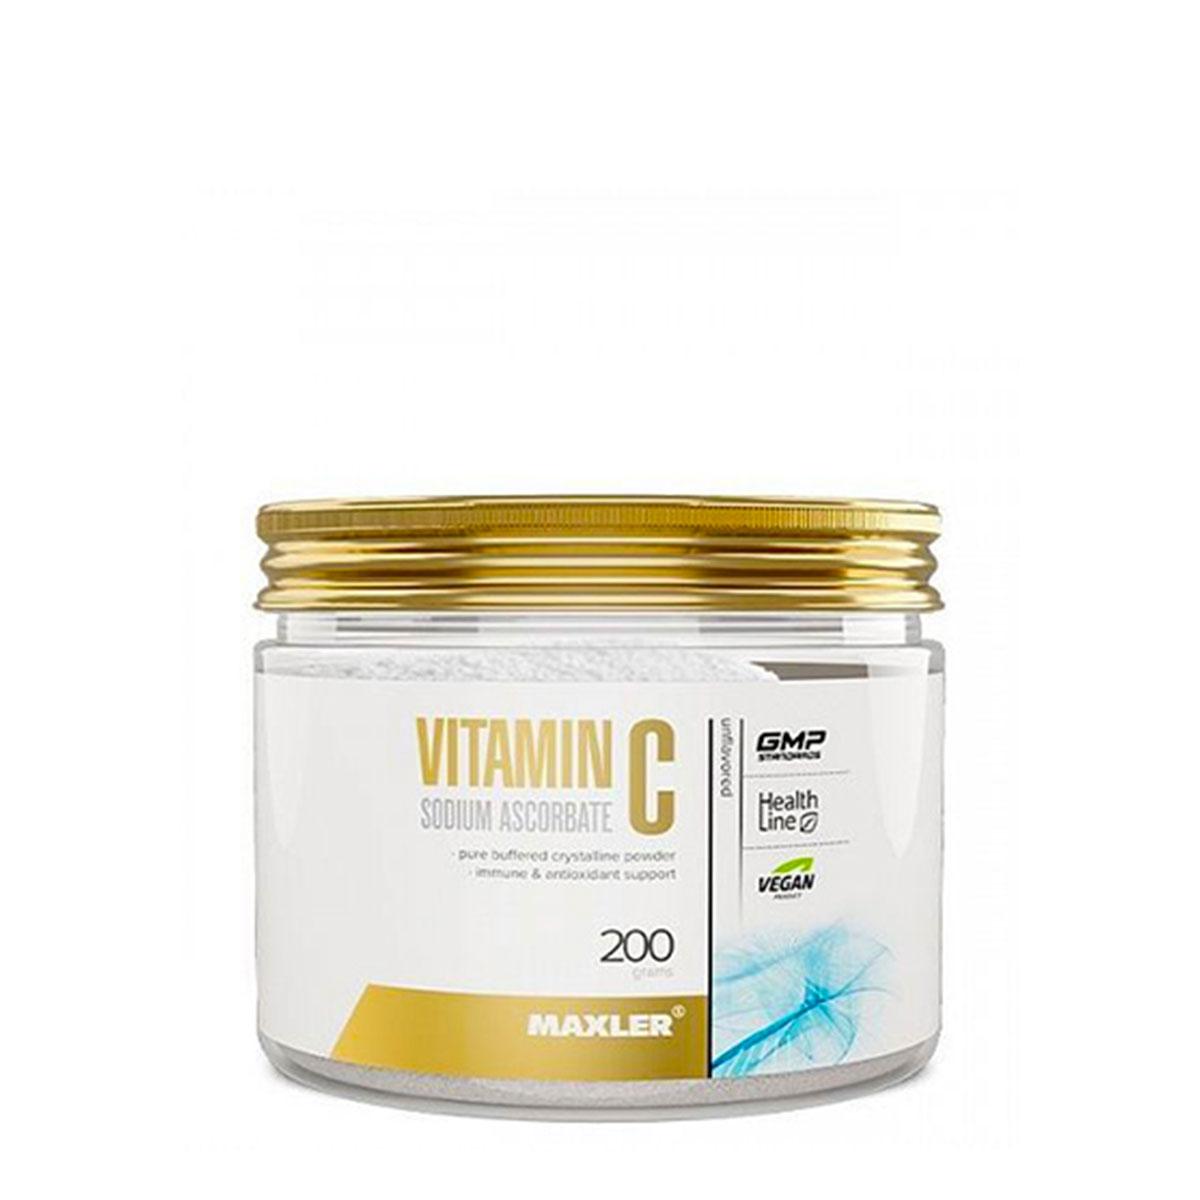 MAXLER Vitamin C Sodium Ascorbate 200g